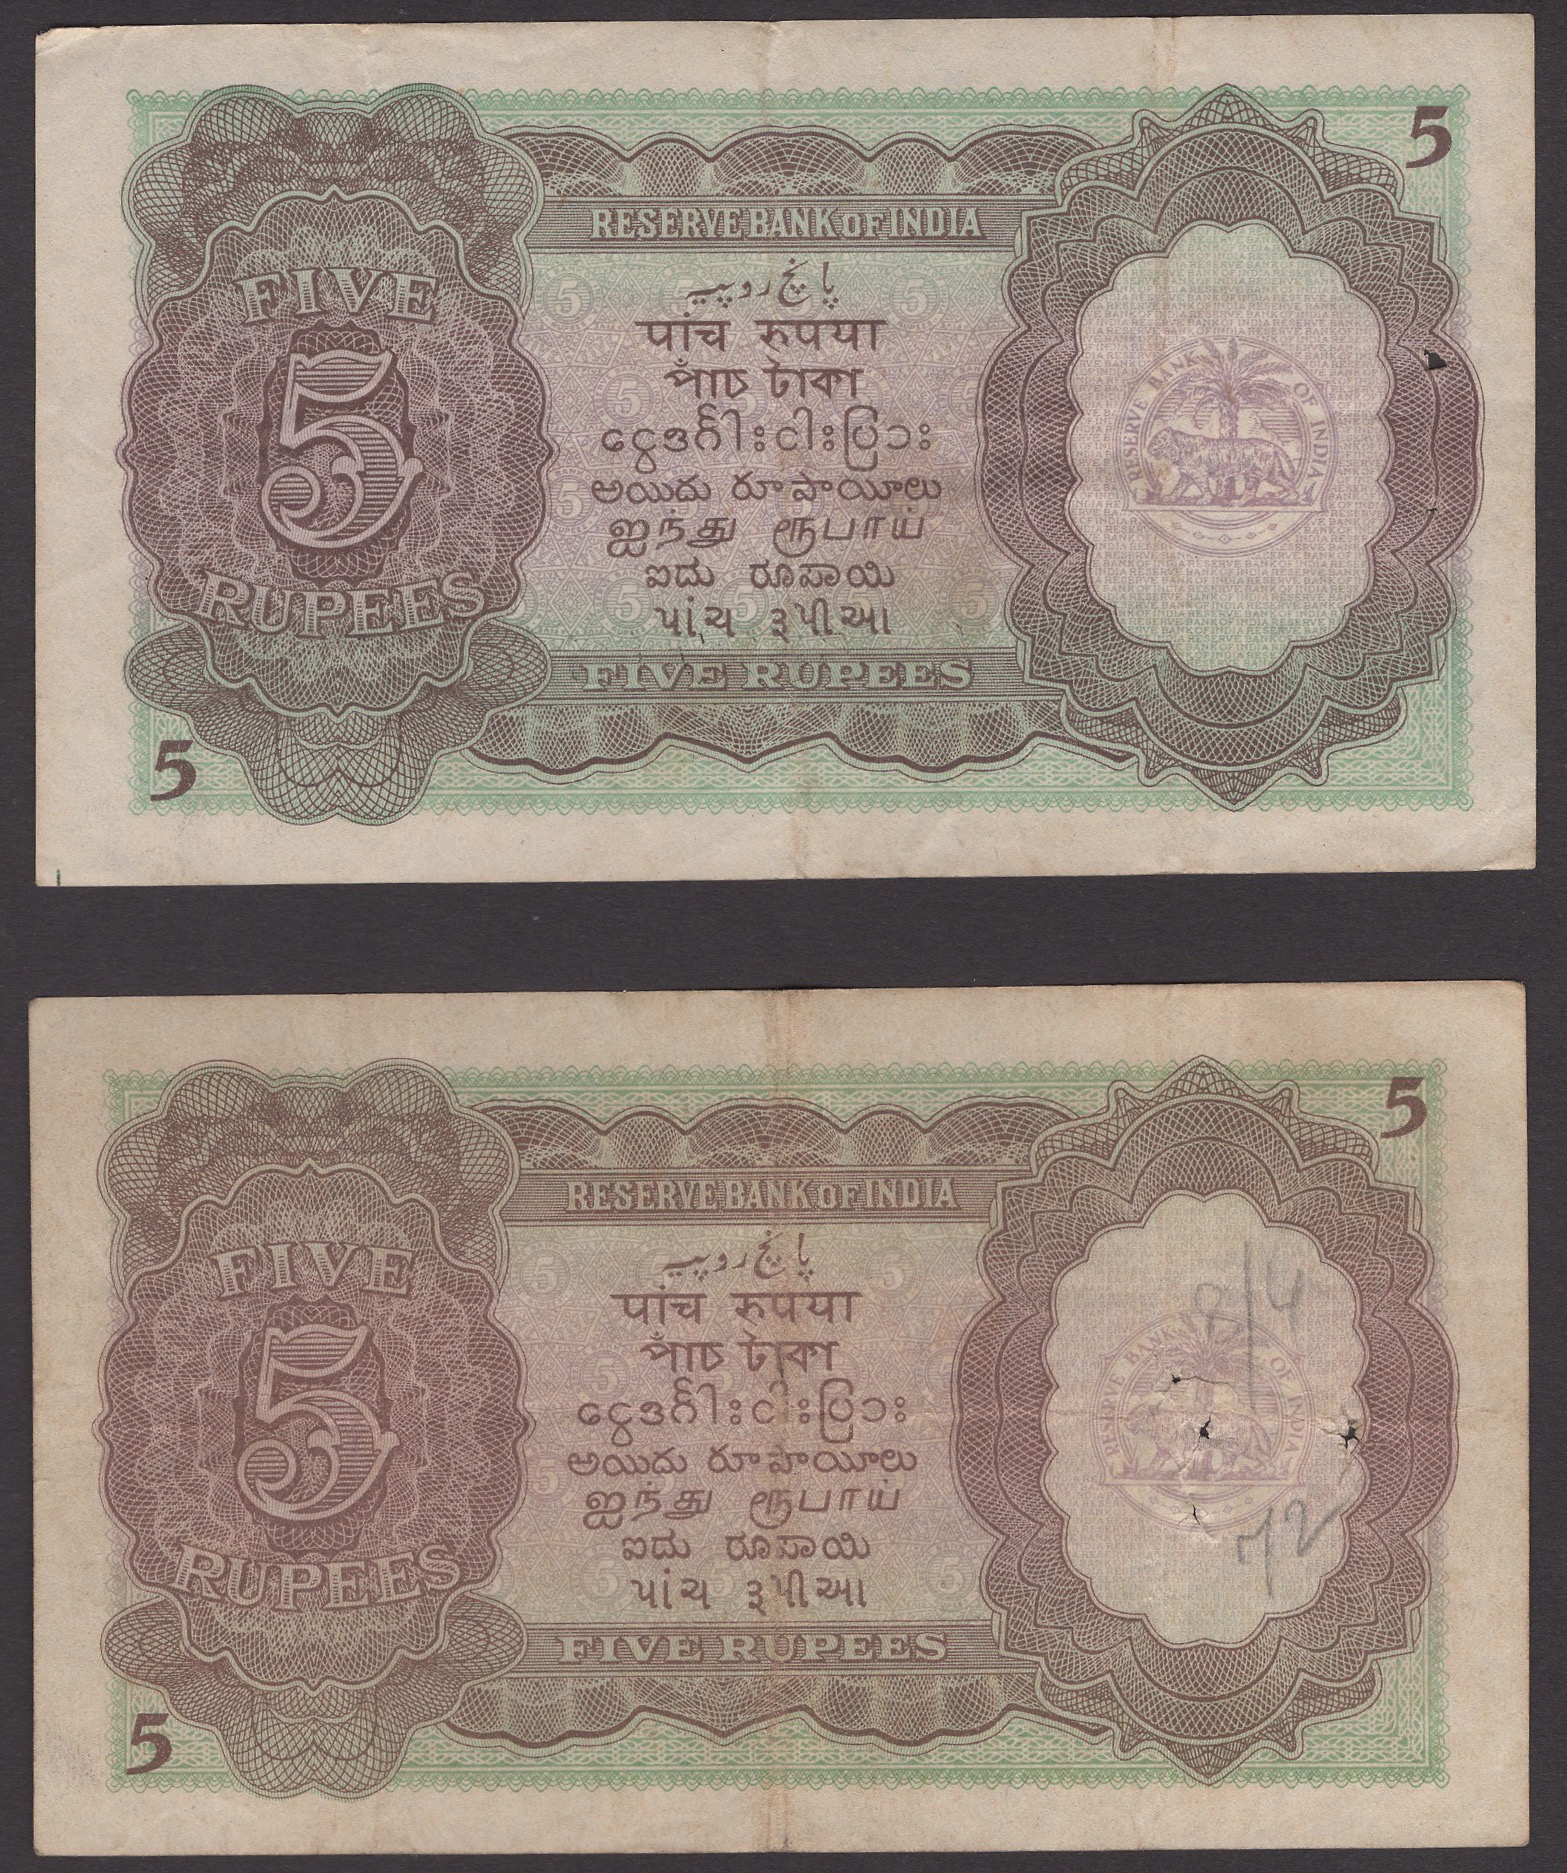 Reserve Bank of India, 2 Rupees (2), ND (1937), prefix G/19, Deshmukh signature, 5 Rupees,... - Image 4 of 4